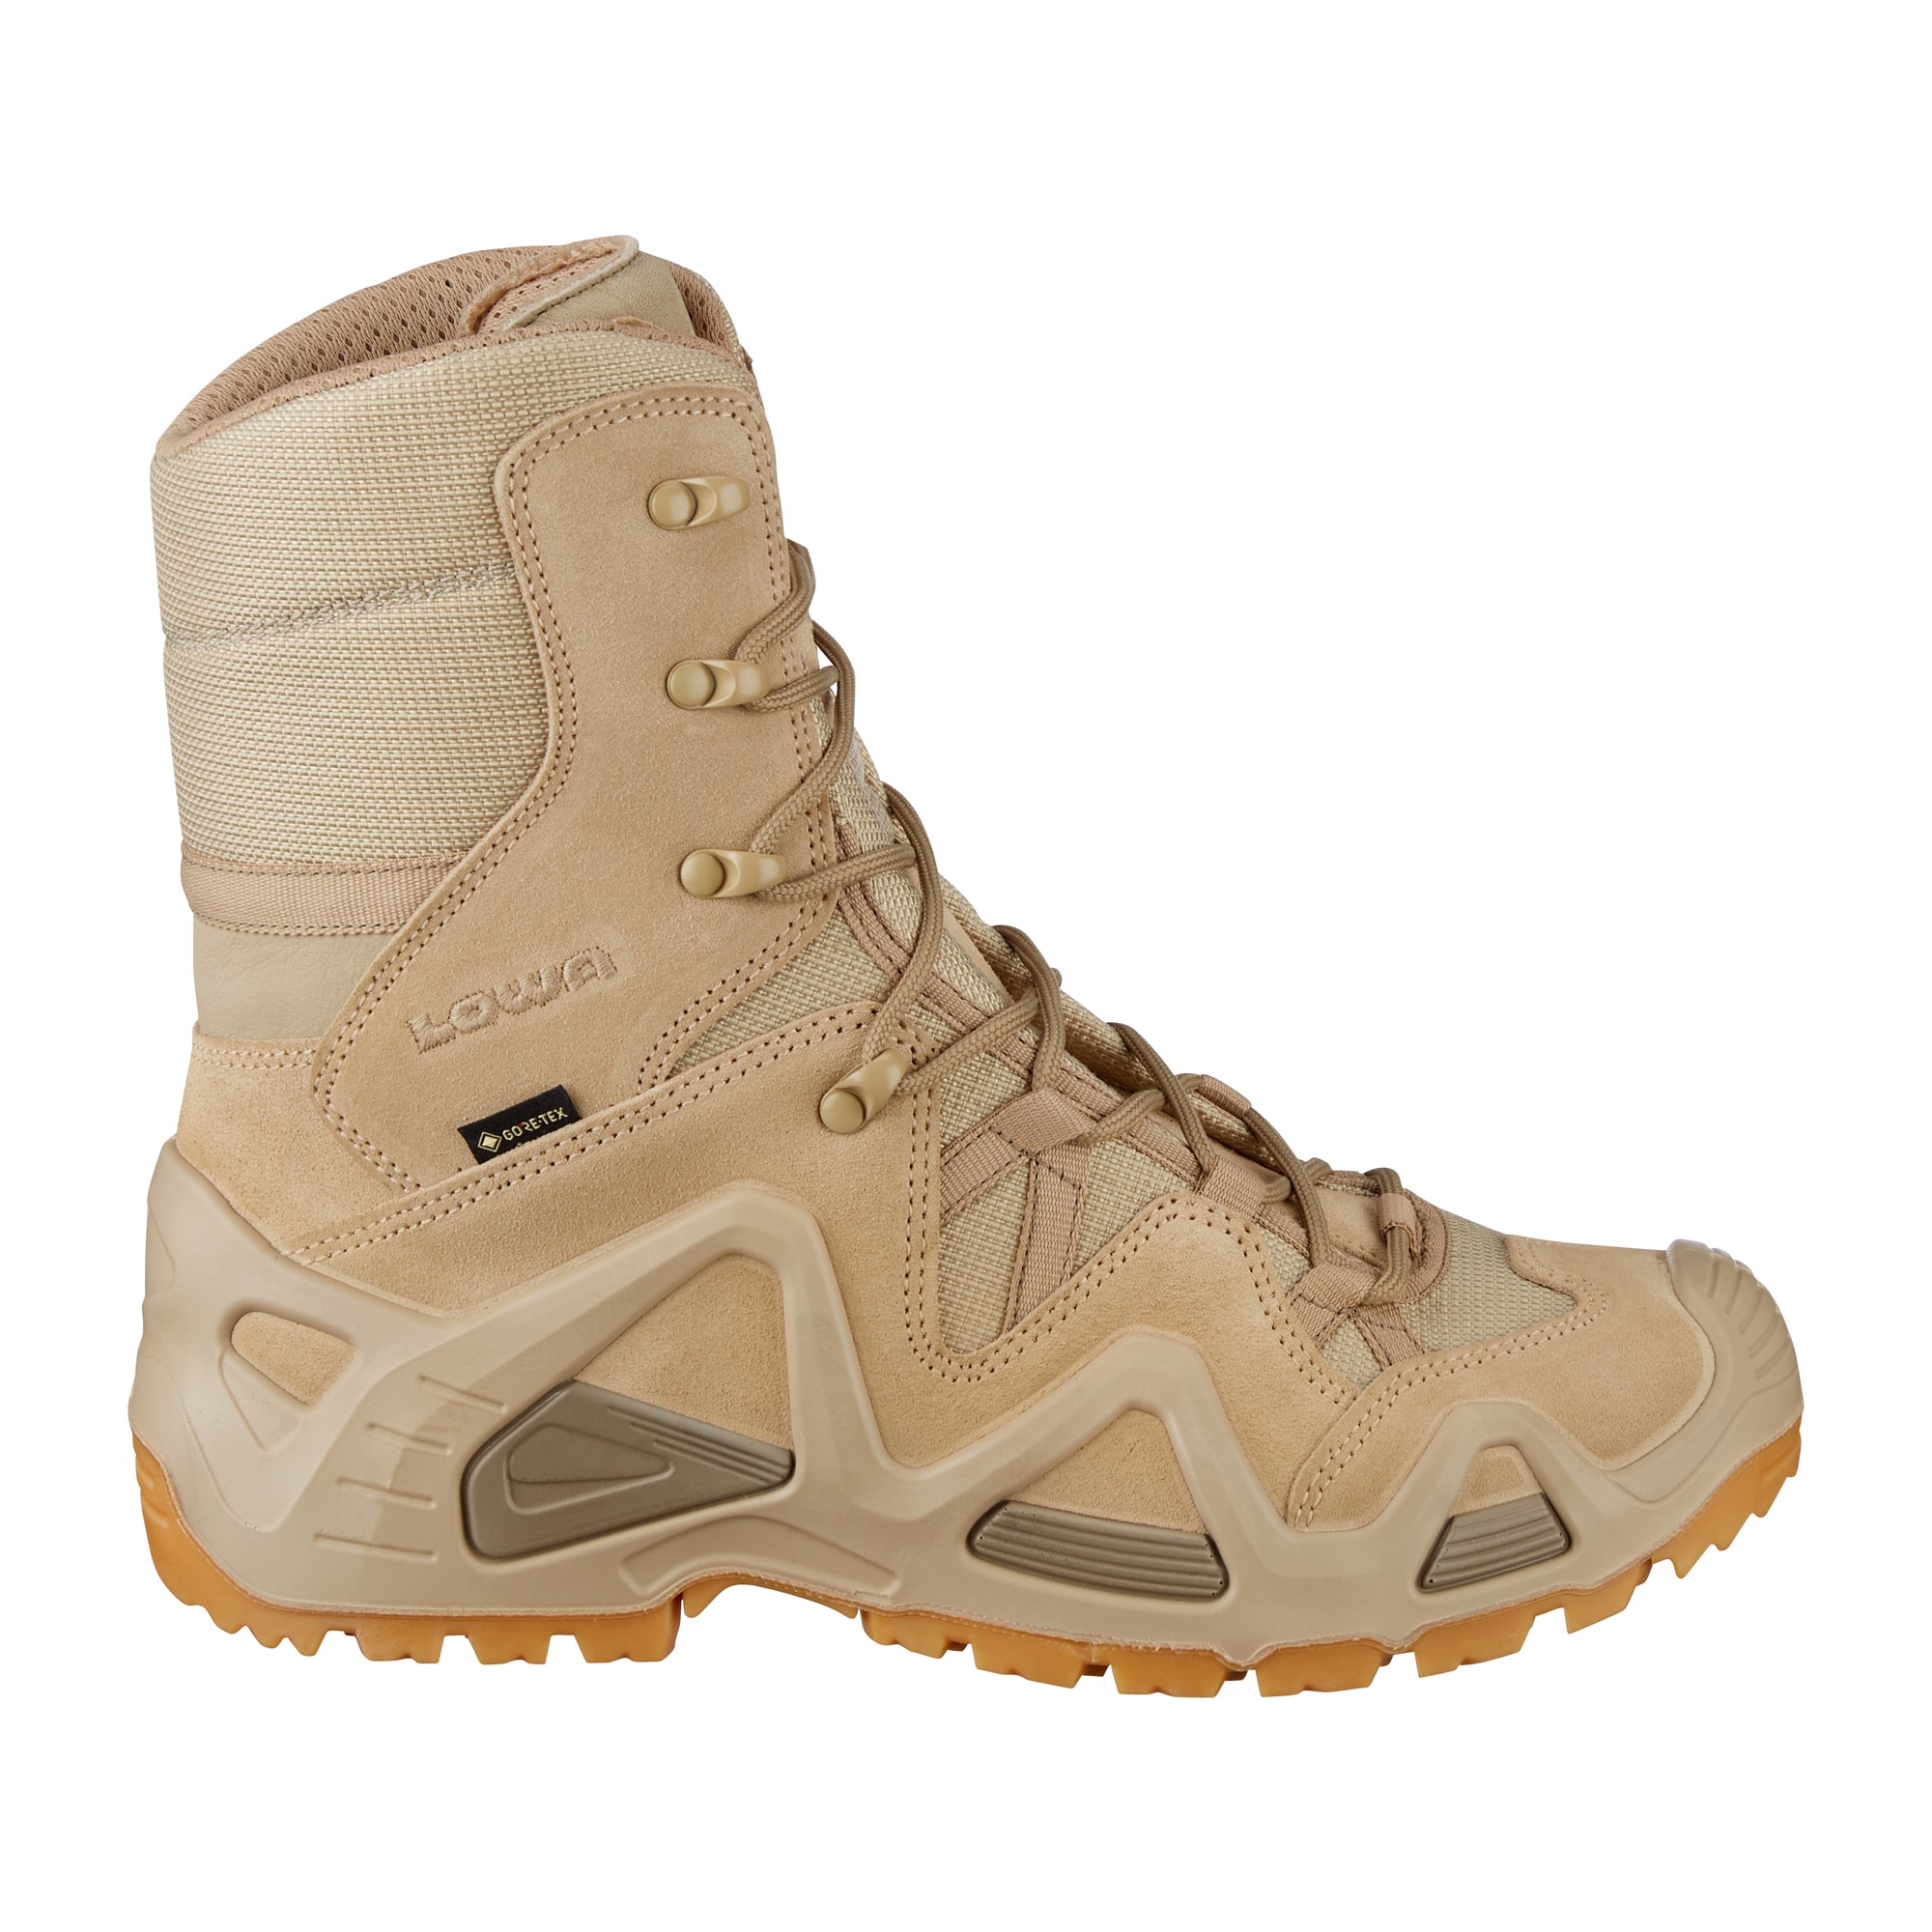 Purchase the Lowa Boots Zephyr GTX Hi desert by ASMC